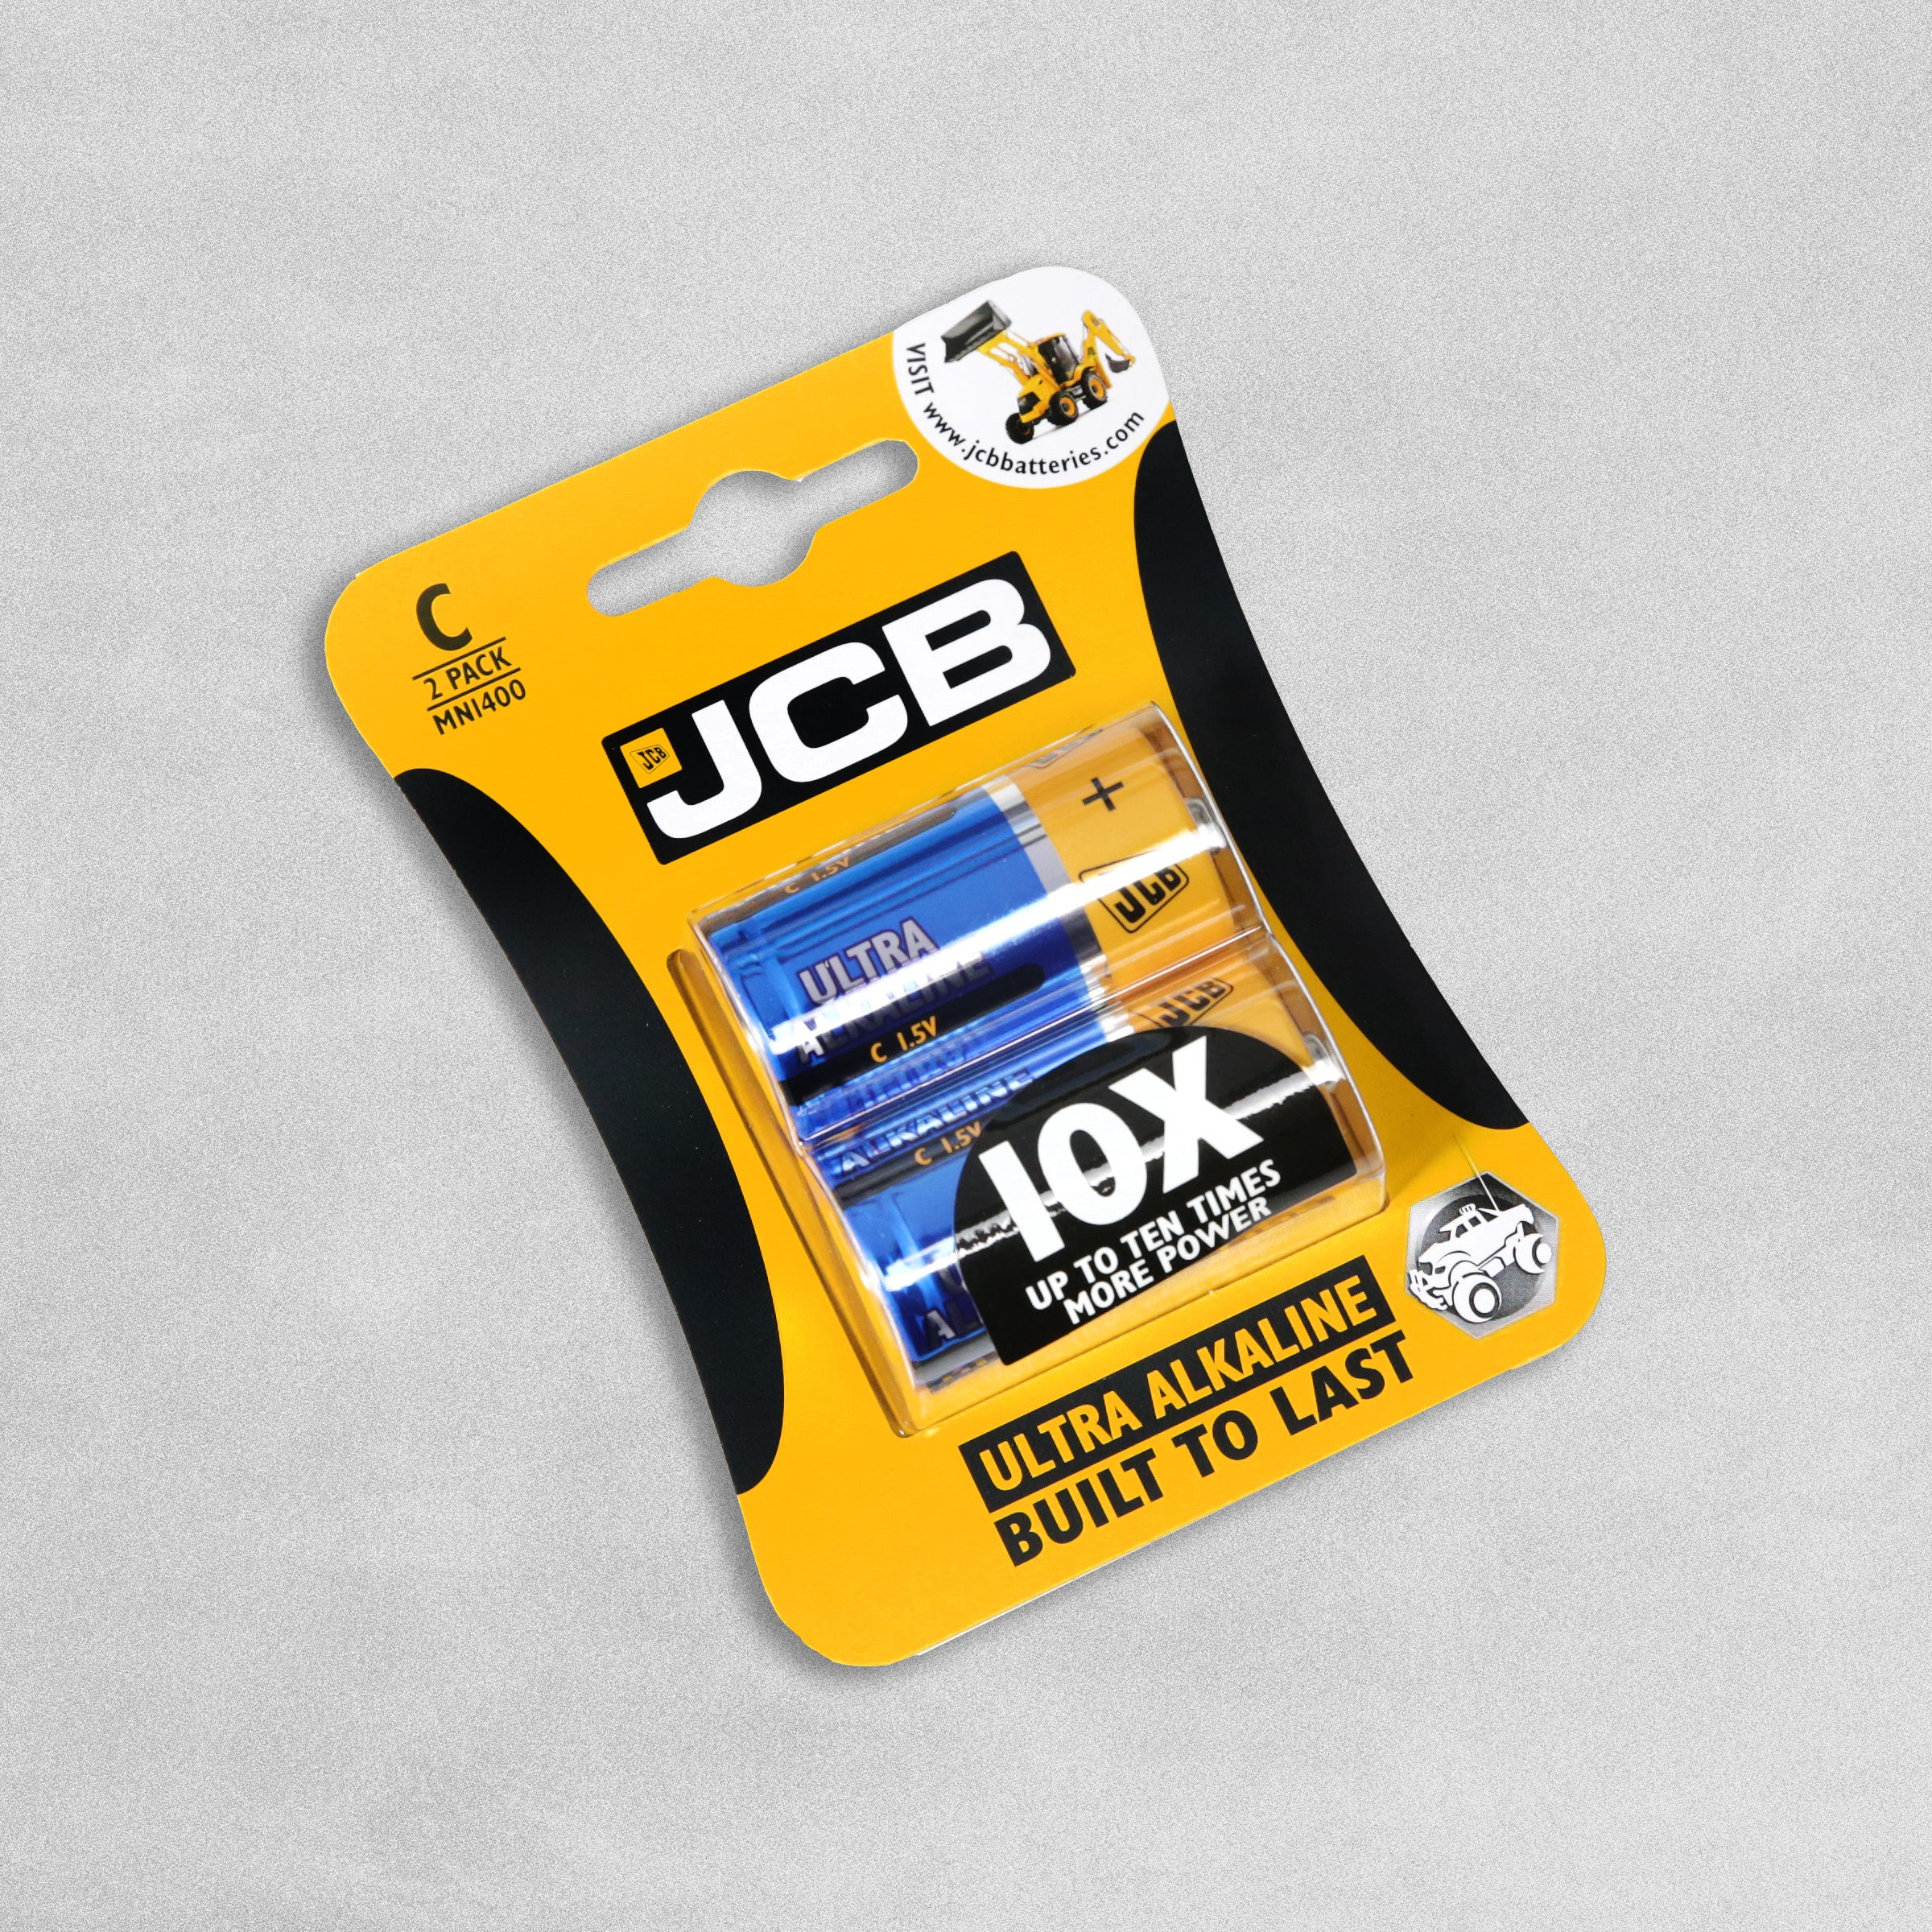 JCB Ultra Alkaline C Batteries - Pack of 2